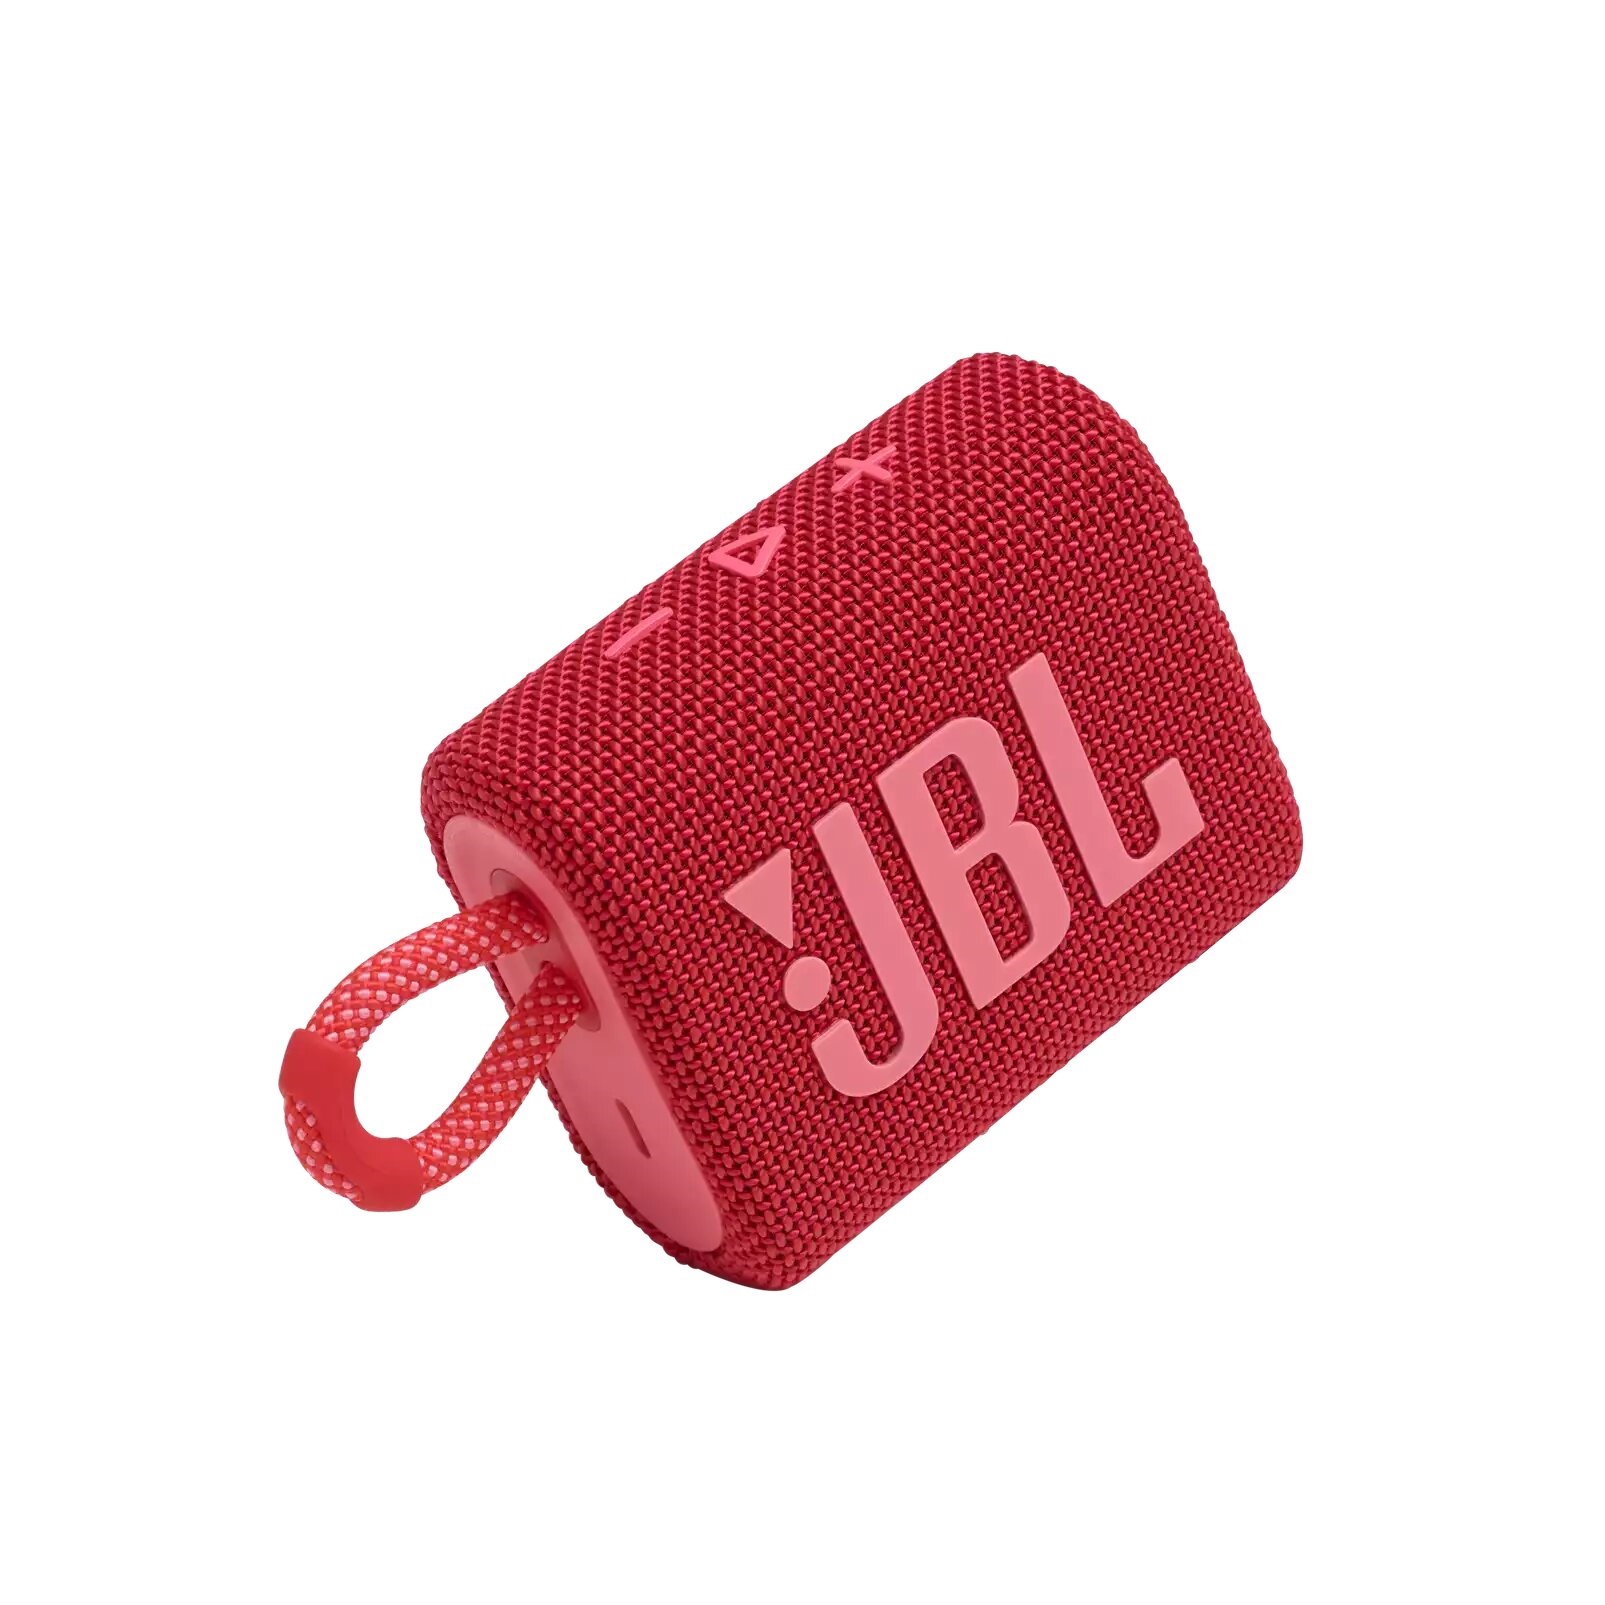 Jbl go 3 цены. Колонка JBL go 3. JBL go3blk. Беспроводная акустика JBL go 3 Black (jblgo3blk). Беспроводная акустика JBL go 3 Red.